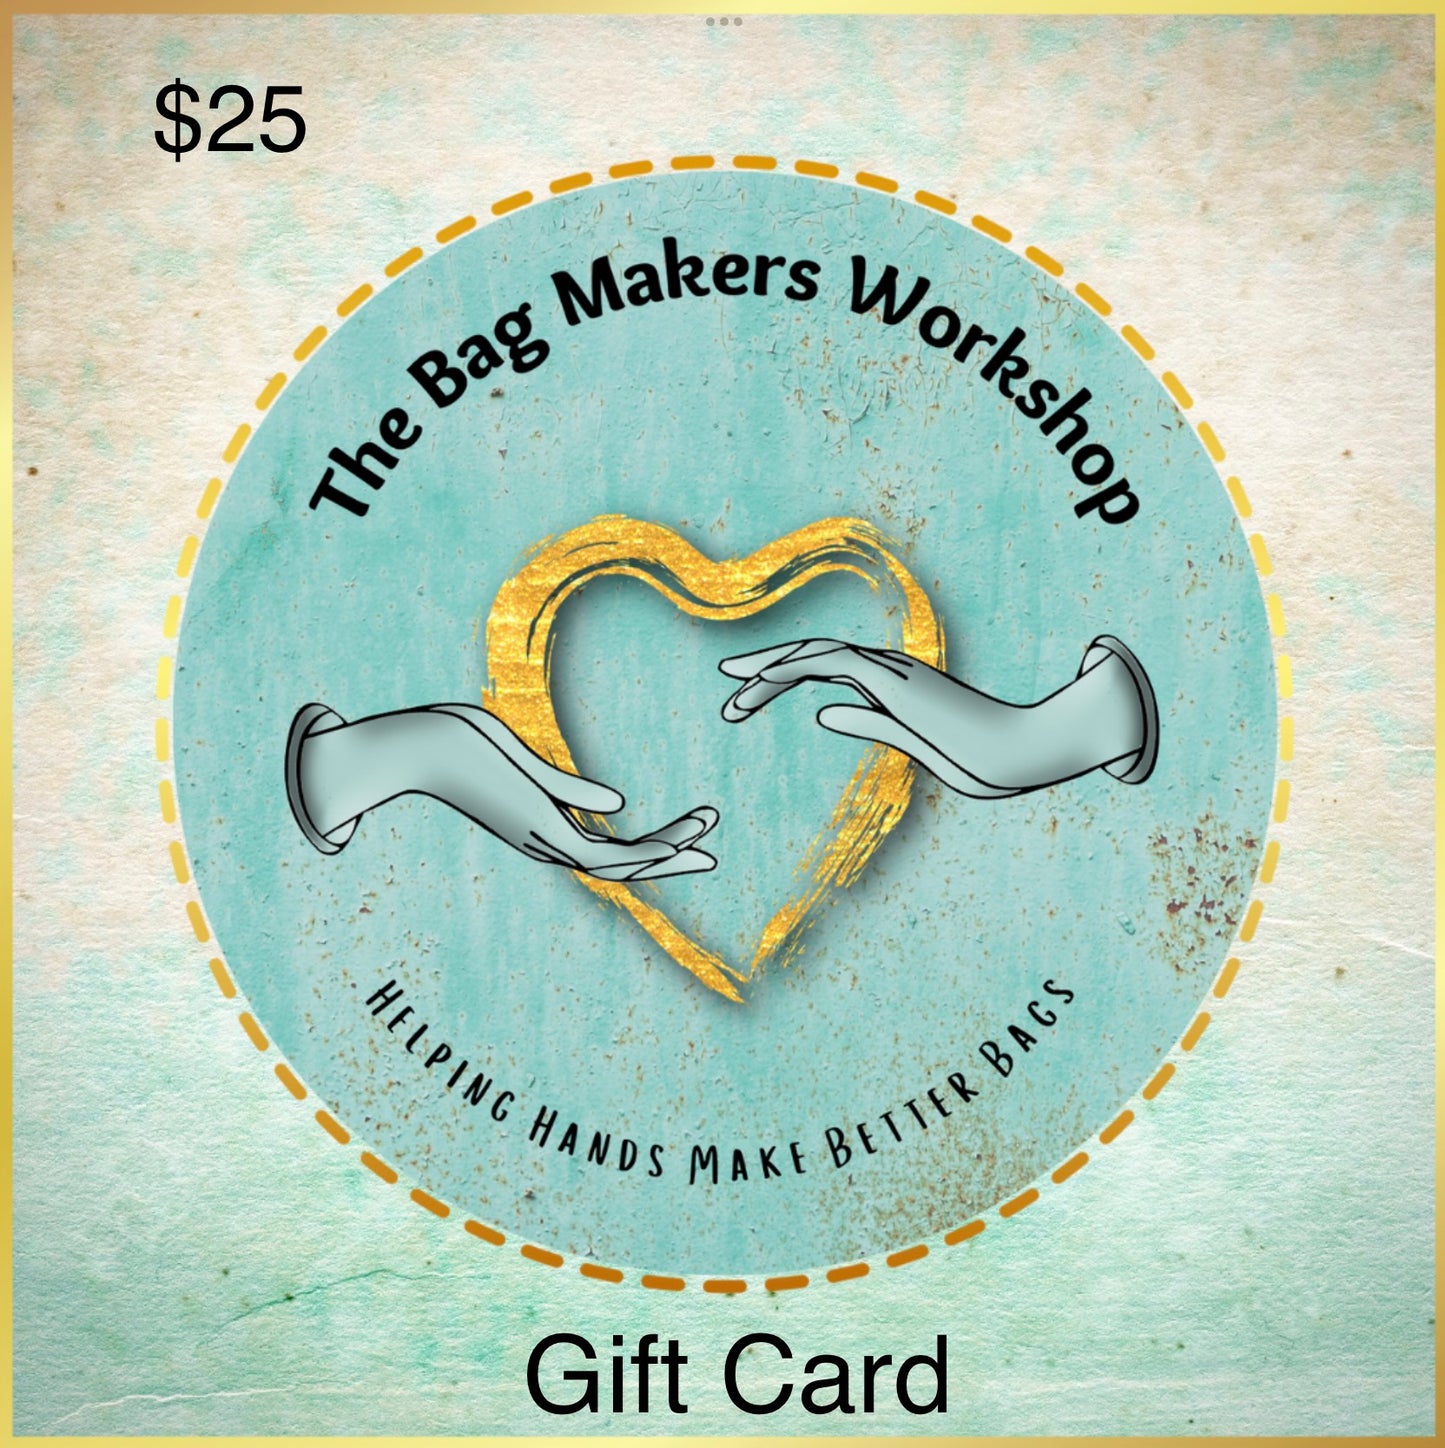 The Bag Makers Workshop Gift Card